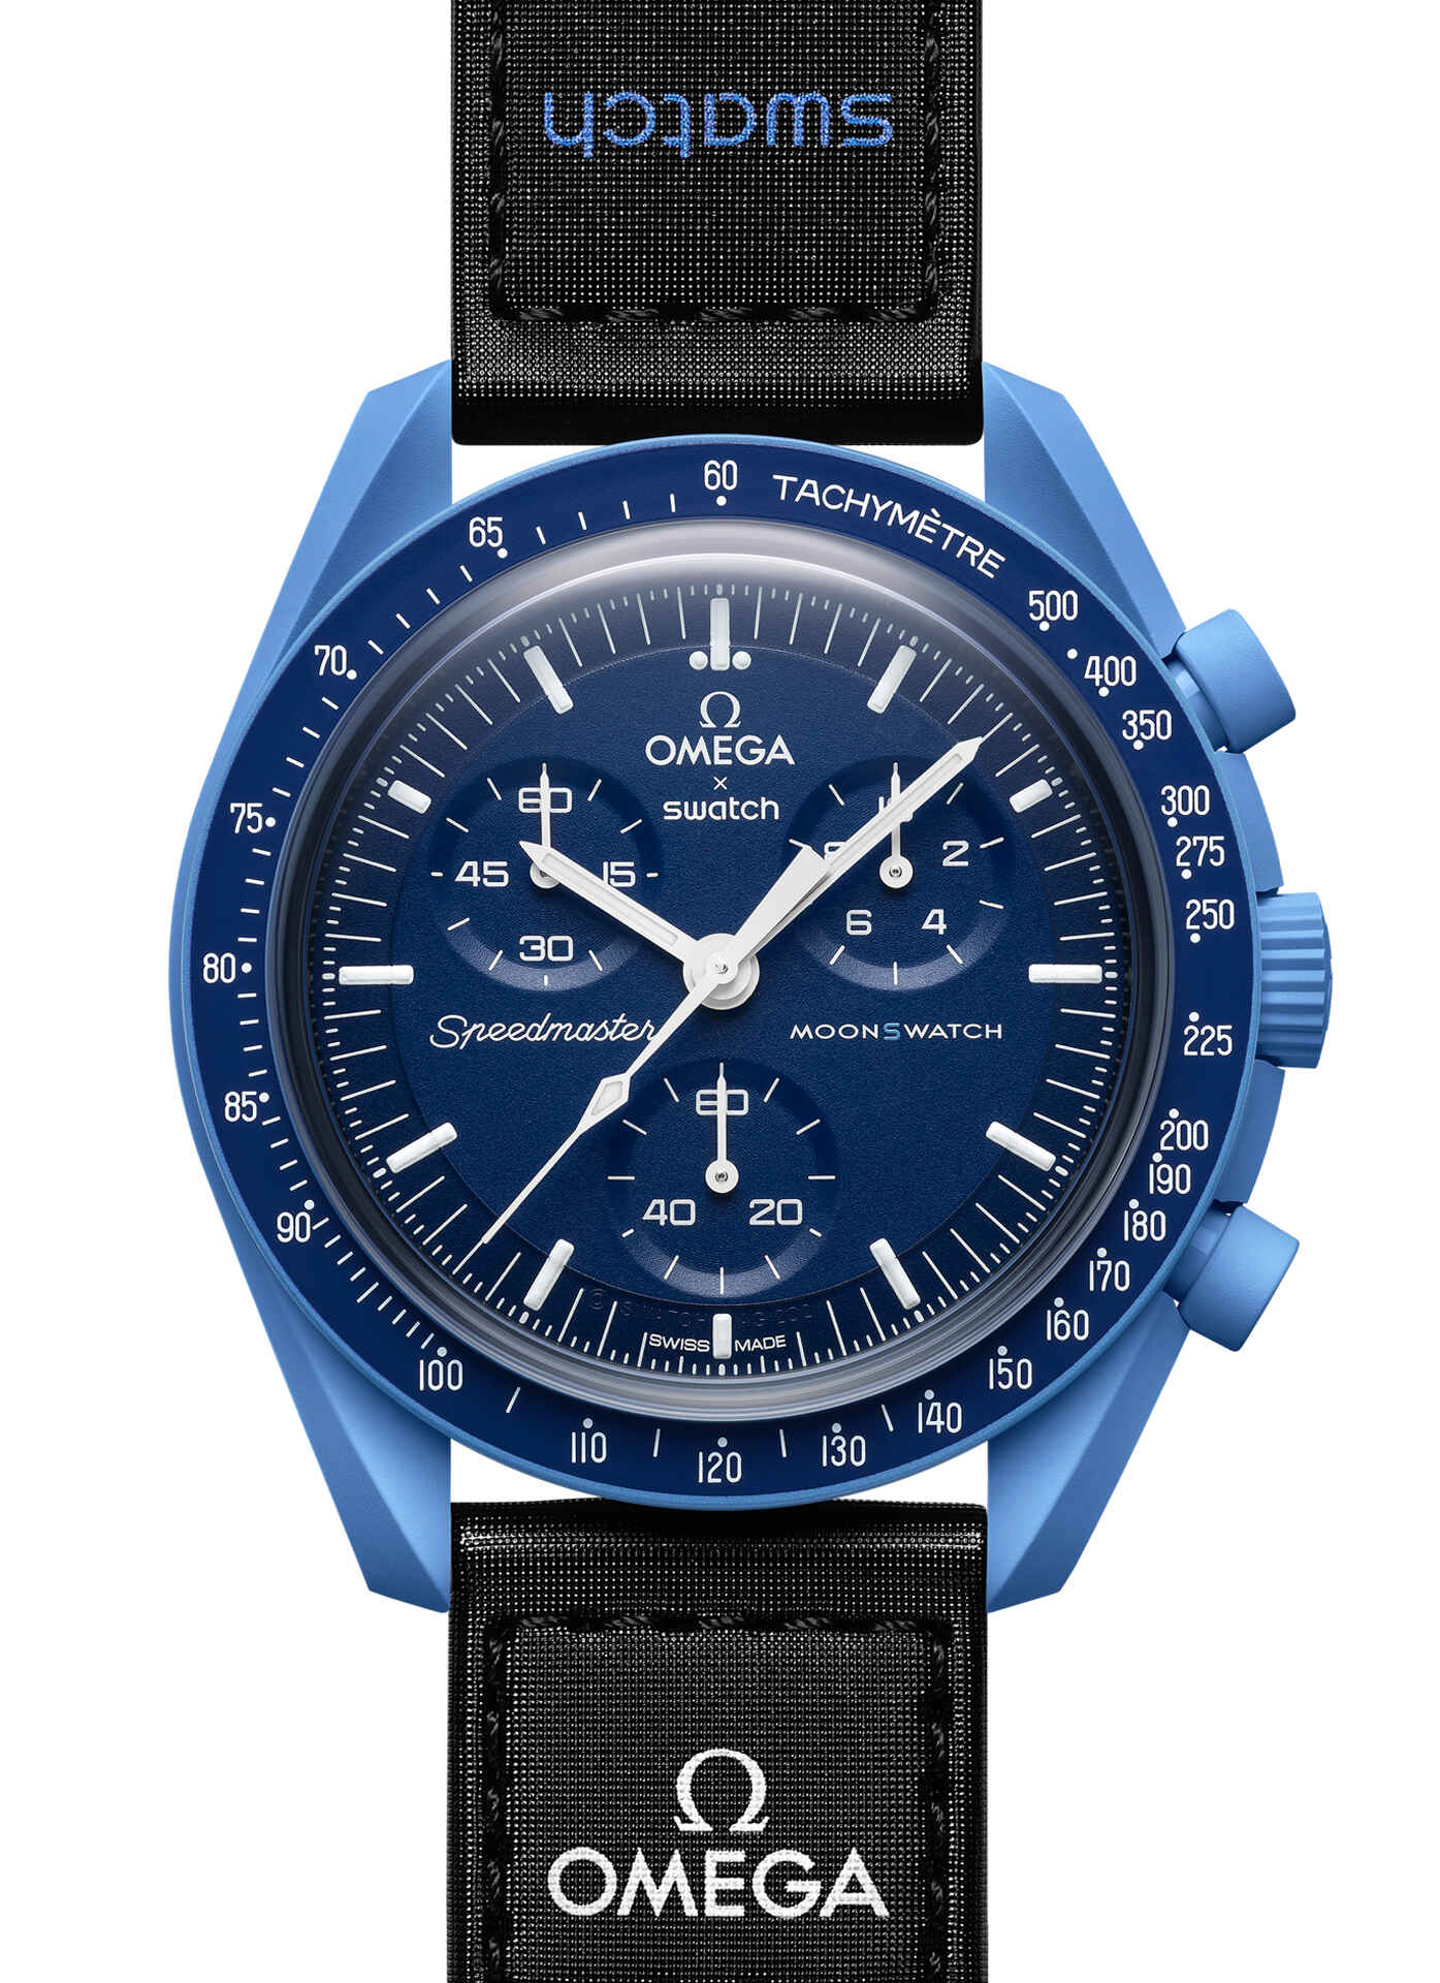 Omega X Swatch Bioceramic MoonSwatch Speedmaster Watches 